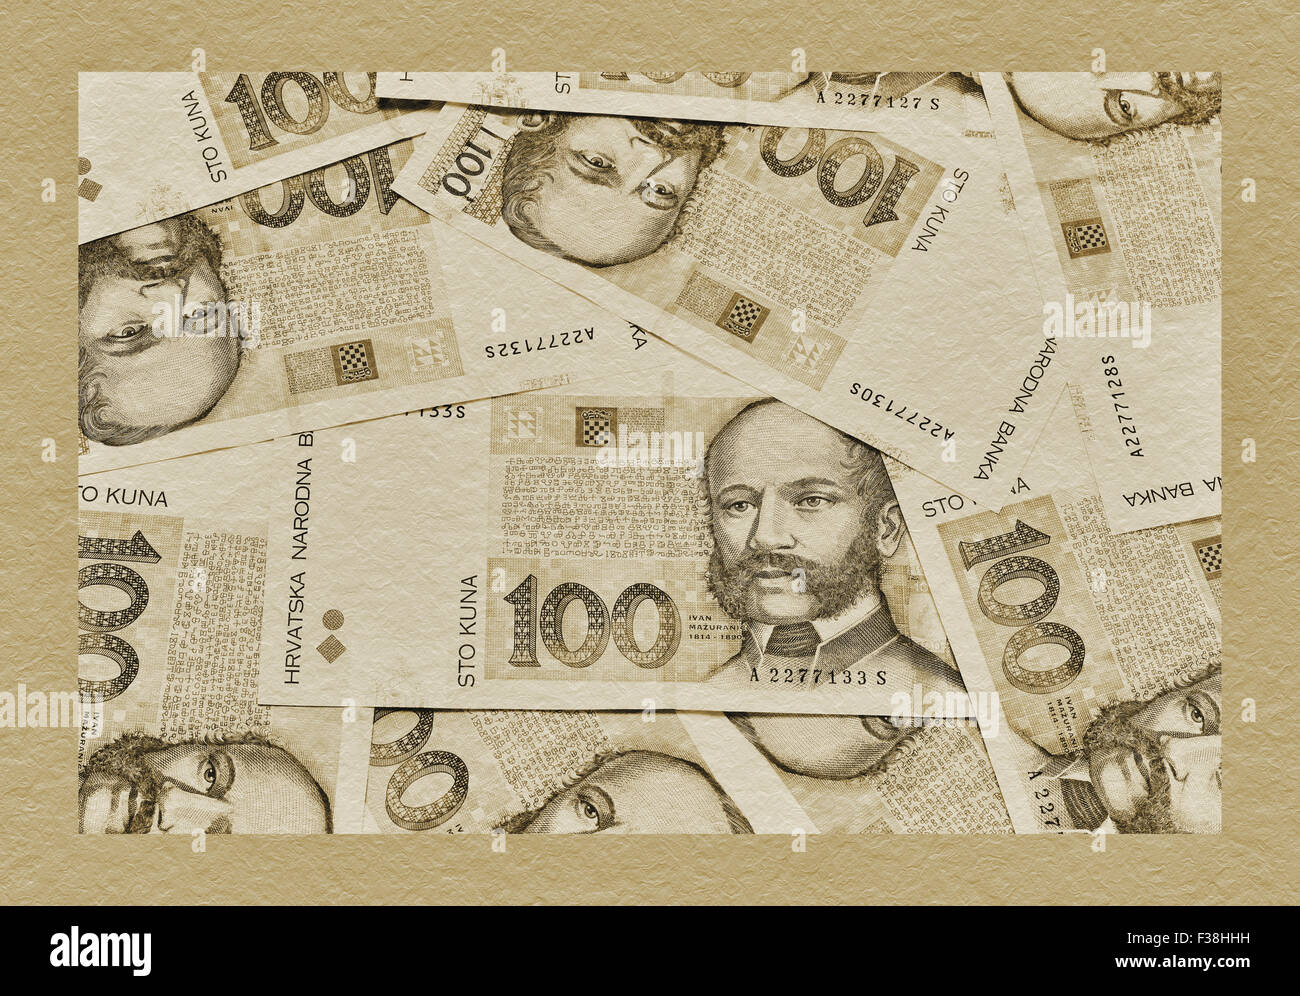 Many Kuna banknotes the currency of Croatia, Europe Stock Photo